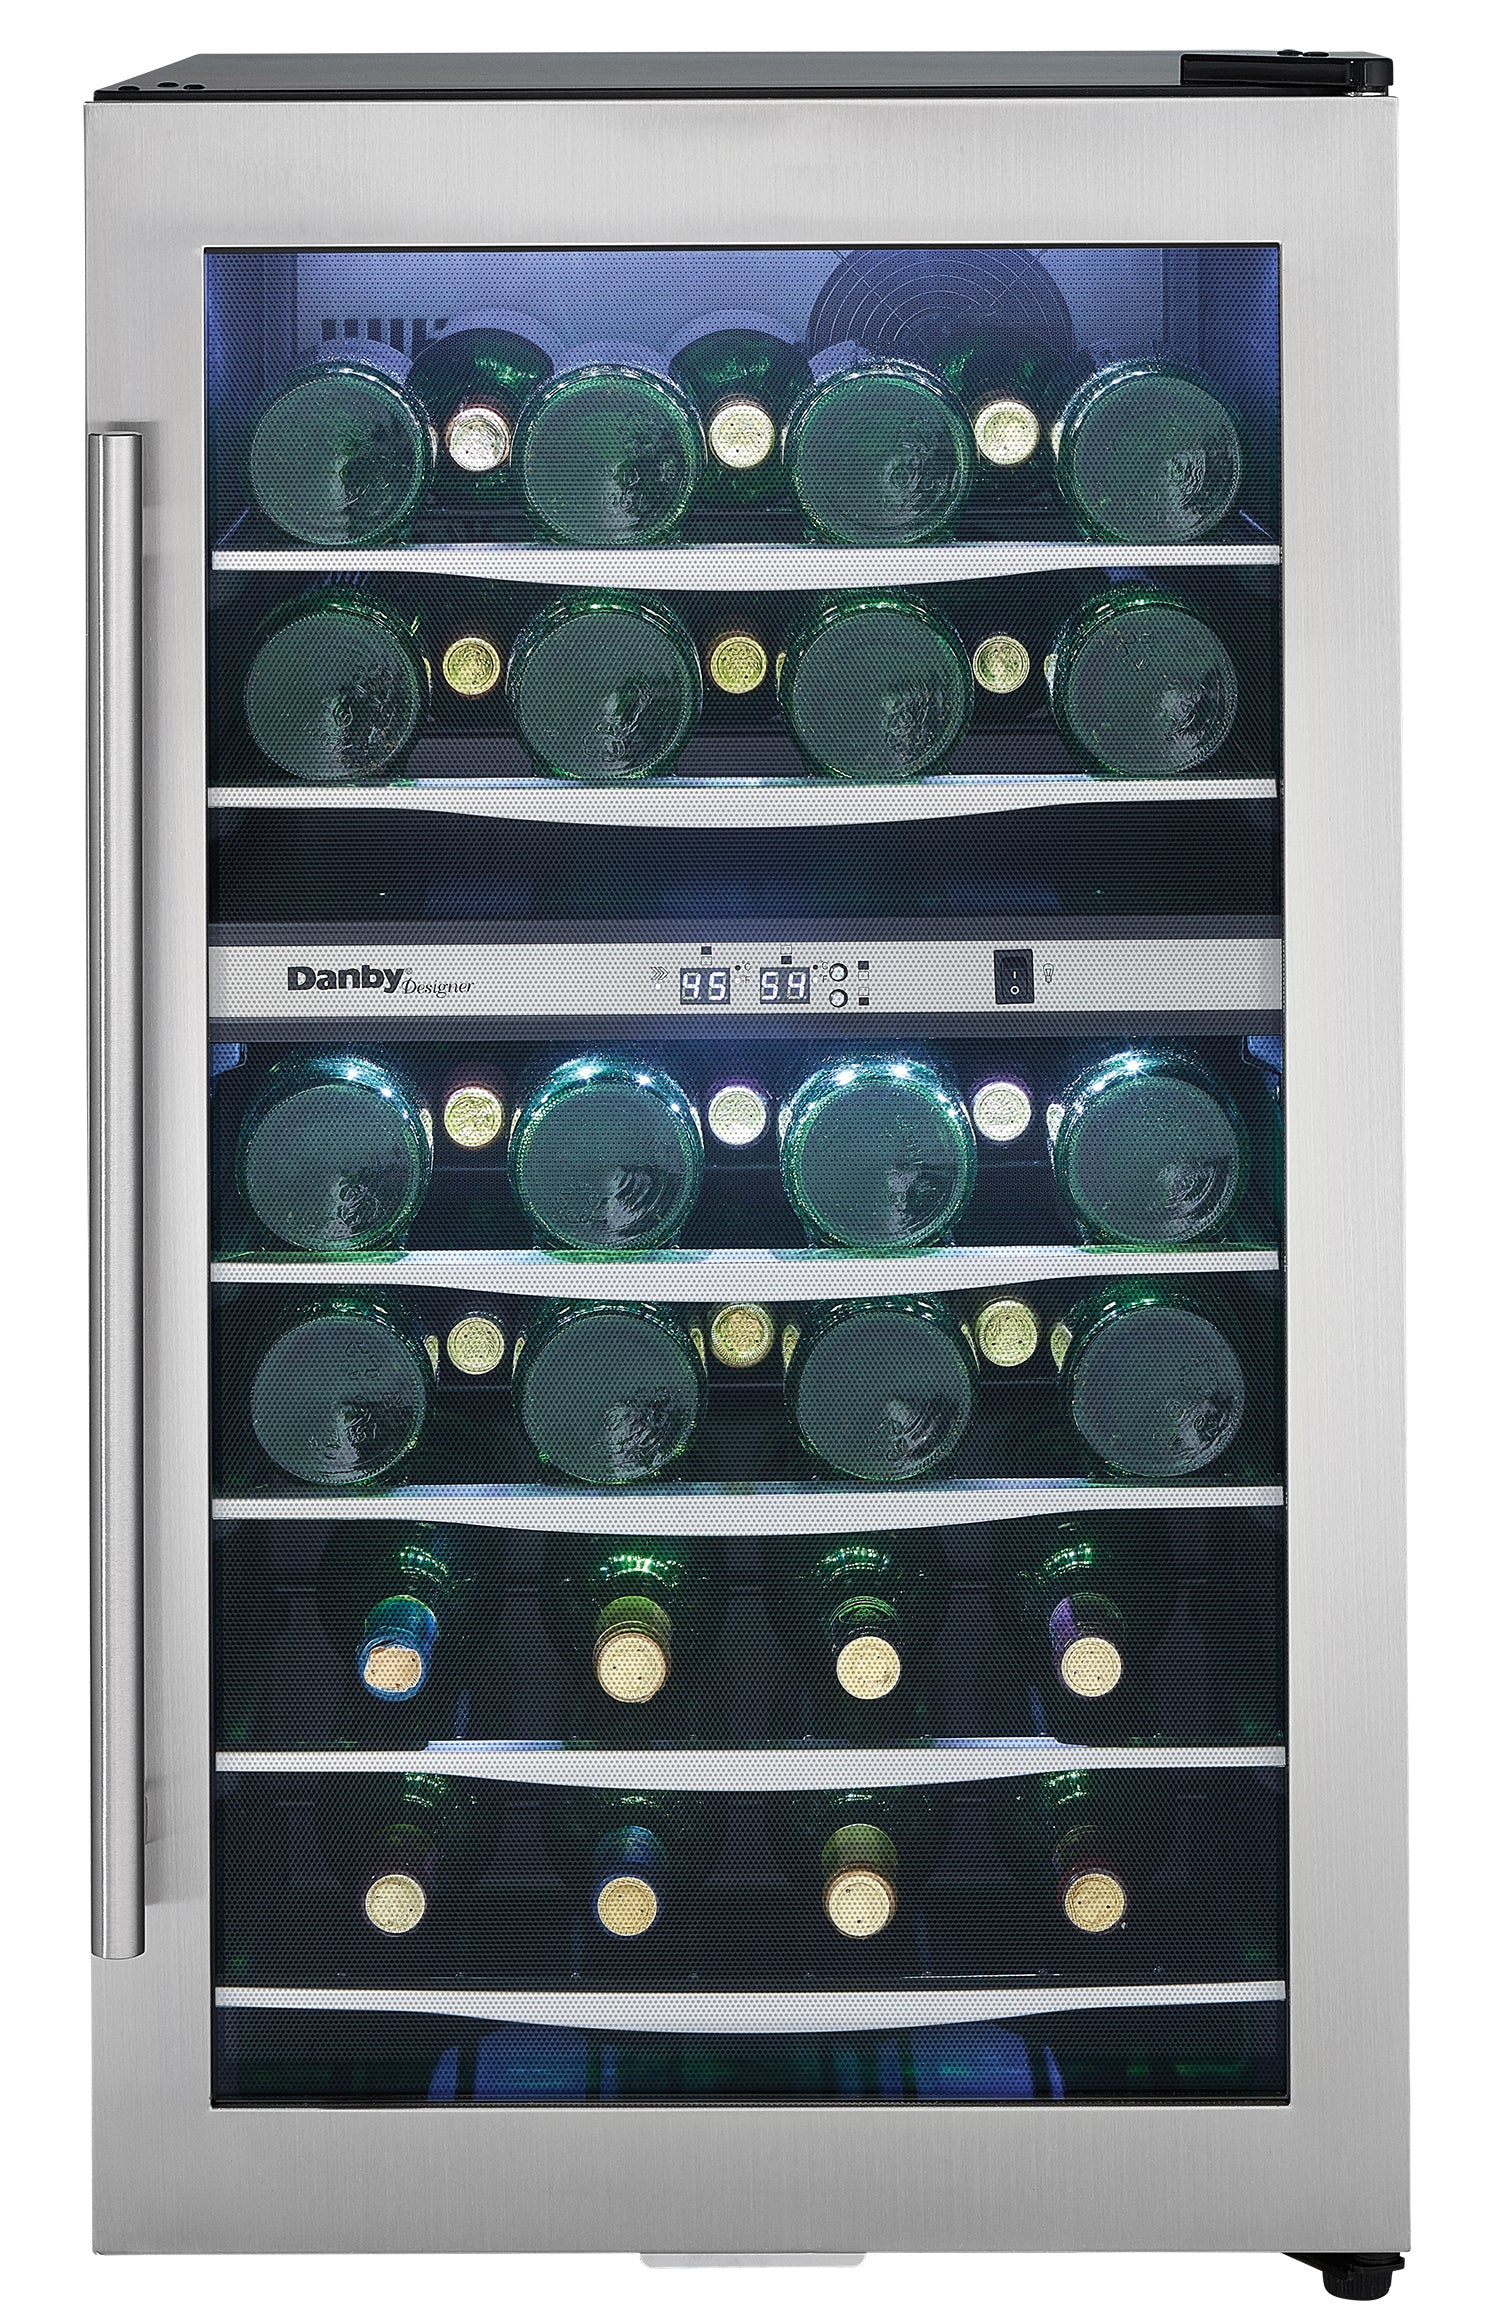 Danby - 19.4 Inch 38 Bottles cu. ft Wine Fridge Refrigerator in Stainless (Open Box) - DWC040A3BSSDD